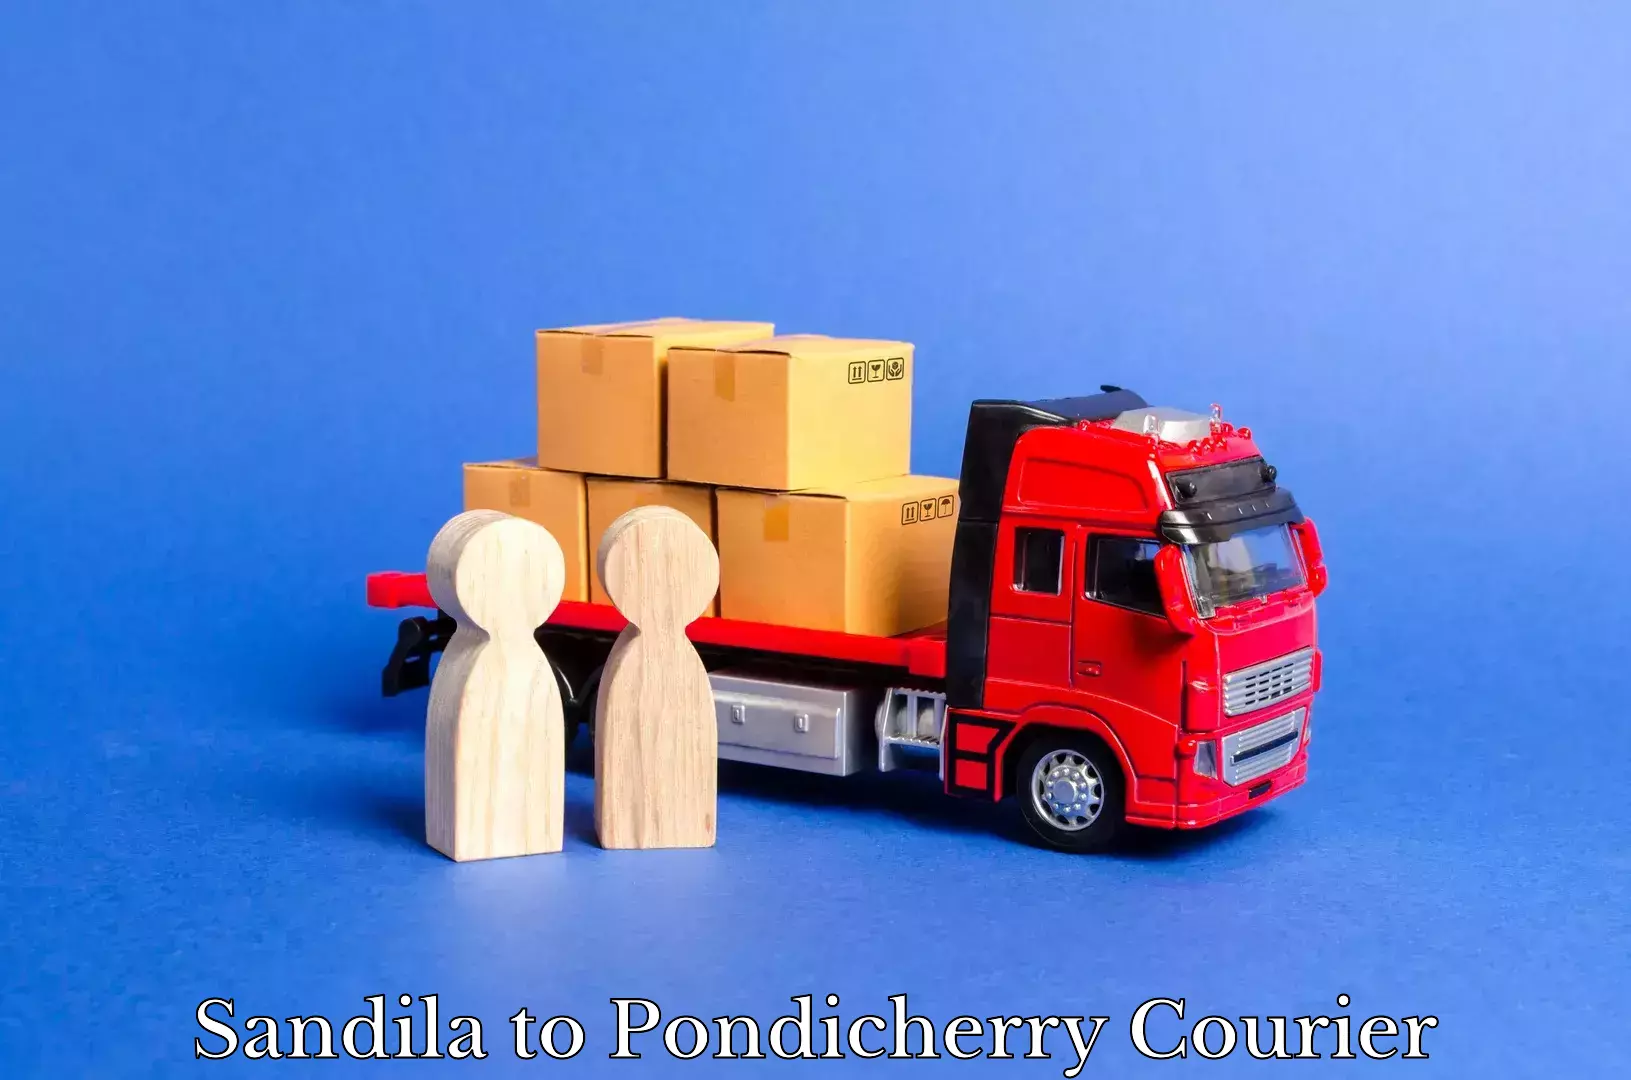 Cash on delivery service Sandila to Pondicherry